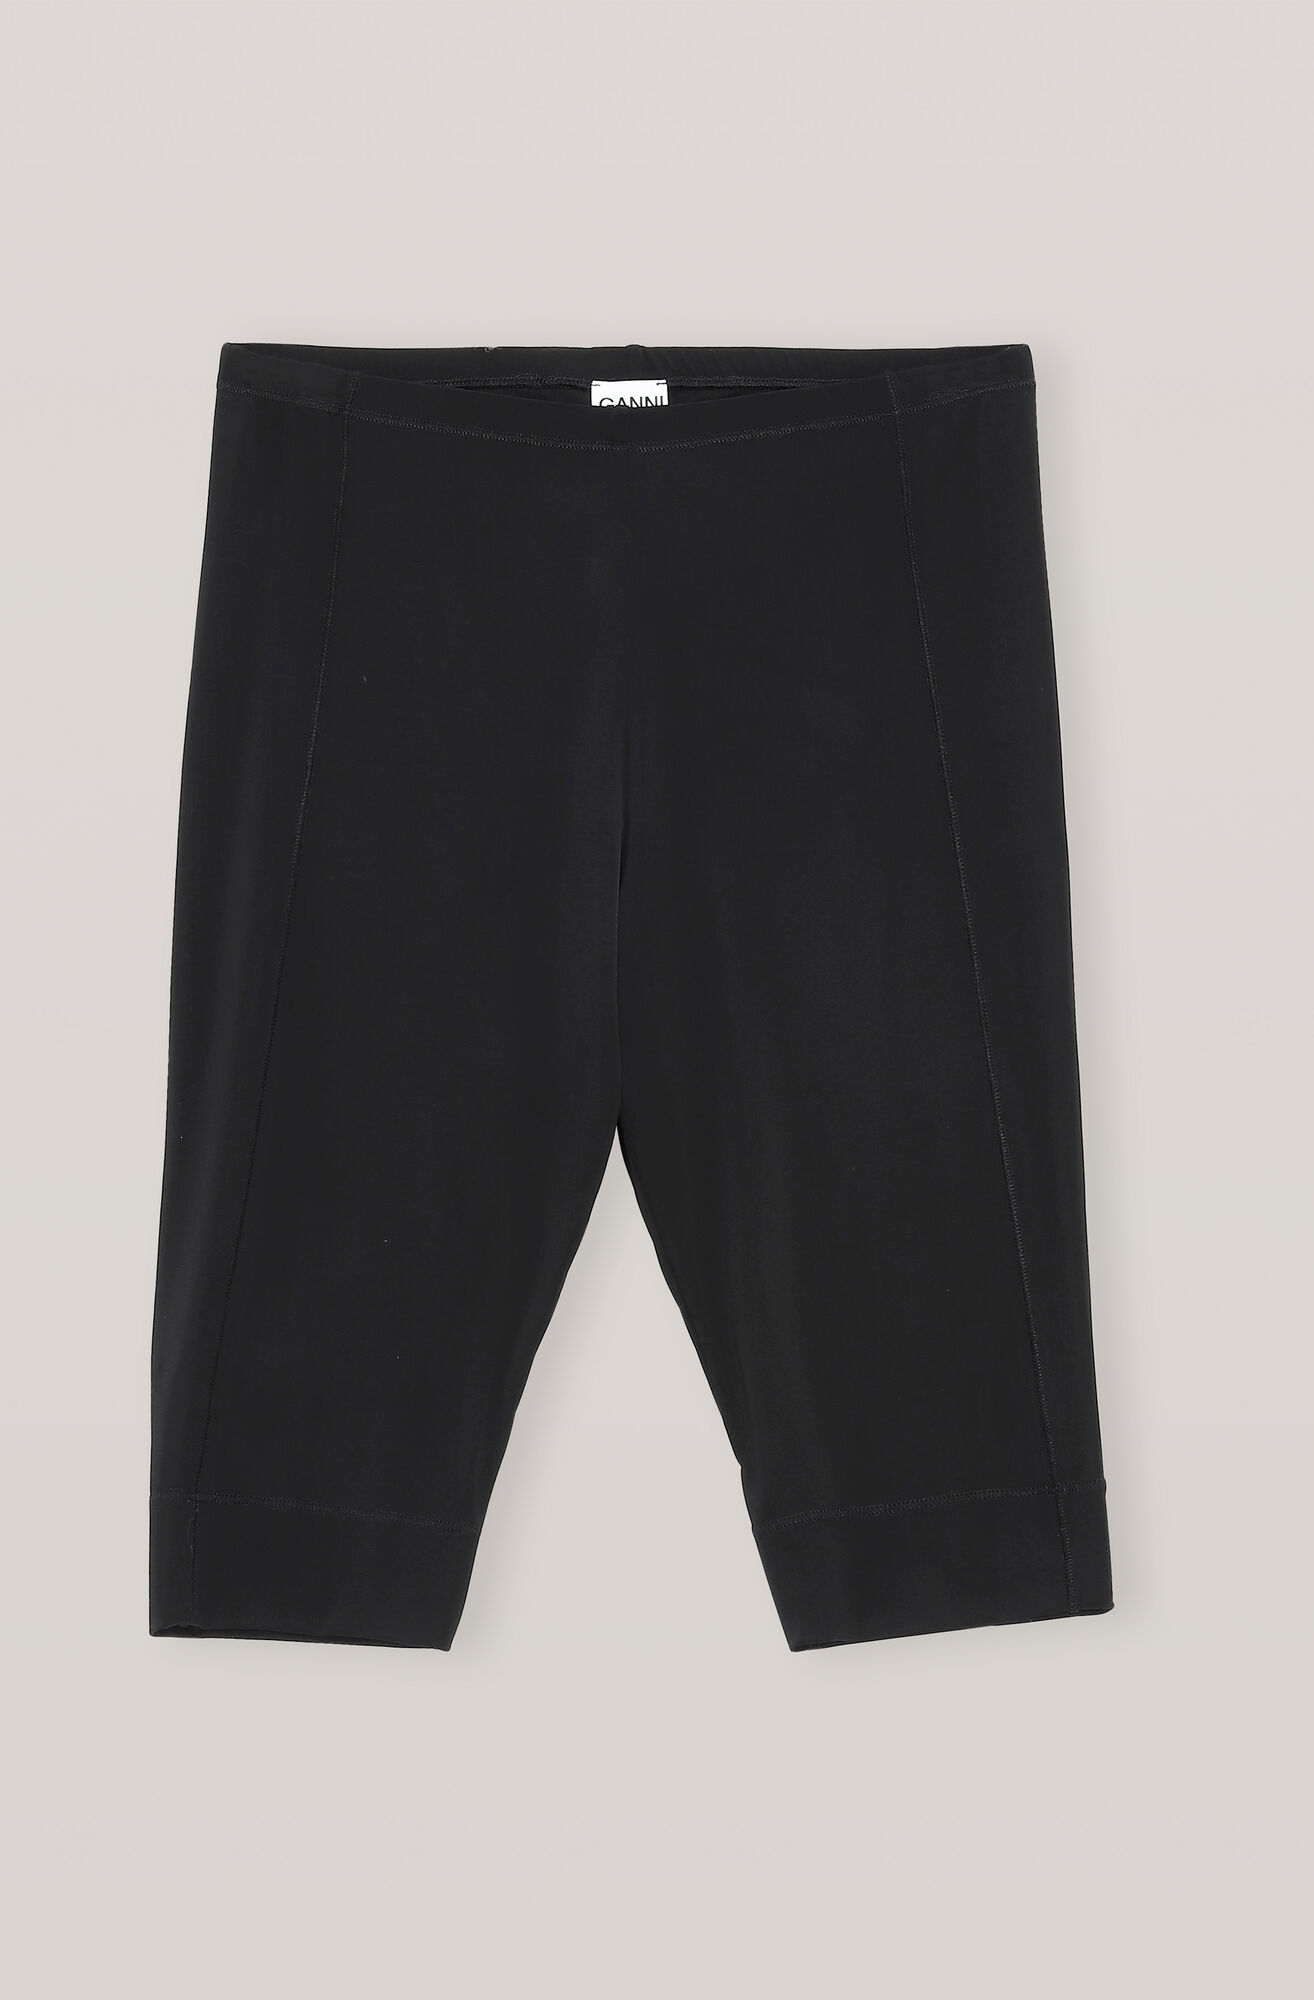 Undertøj Korte leggings i rayon, Rayon, in colour Black - 1 - GANNI